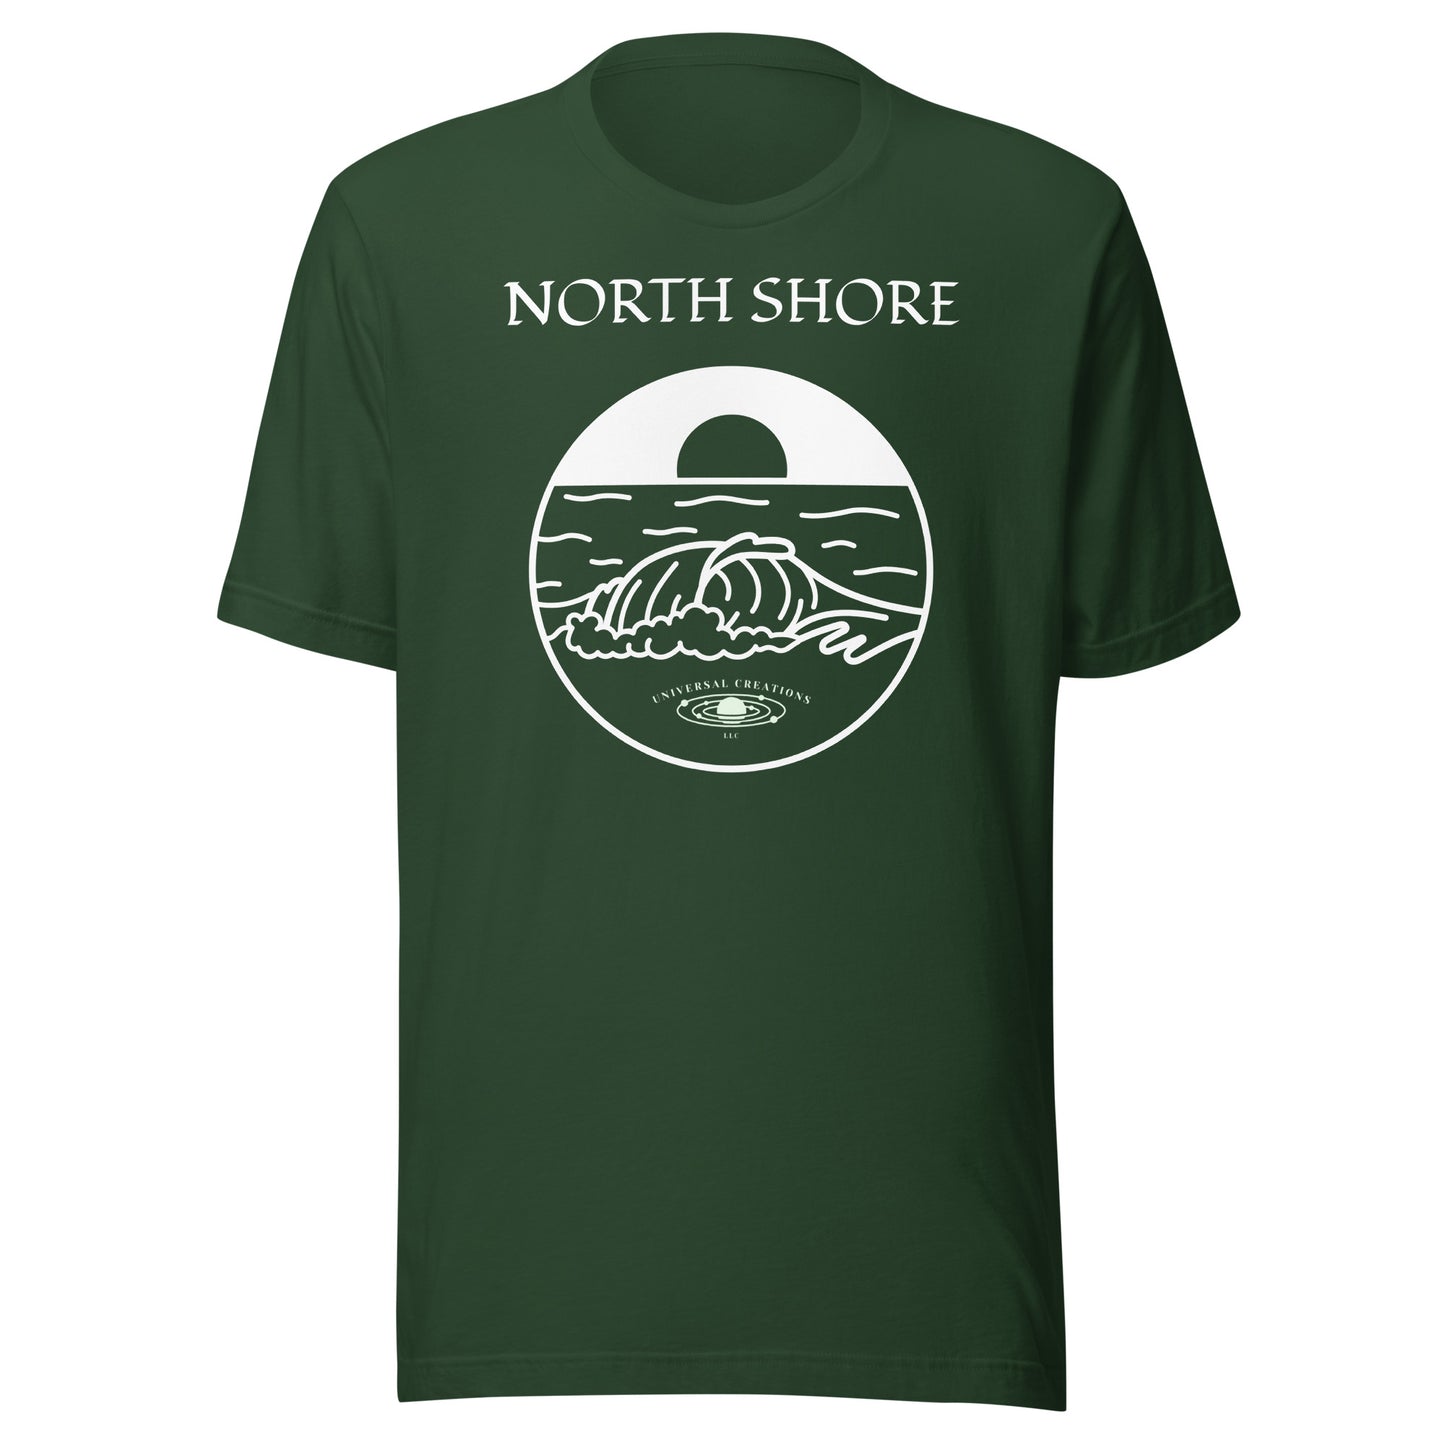 North shore- wave t-shirt